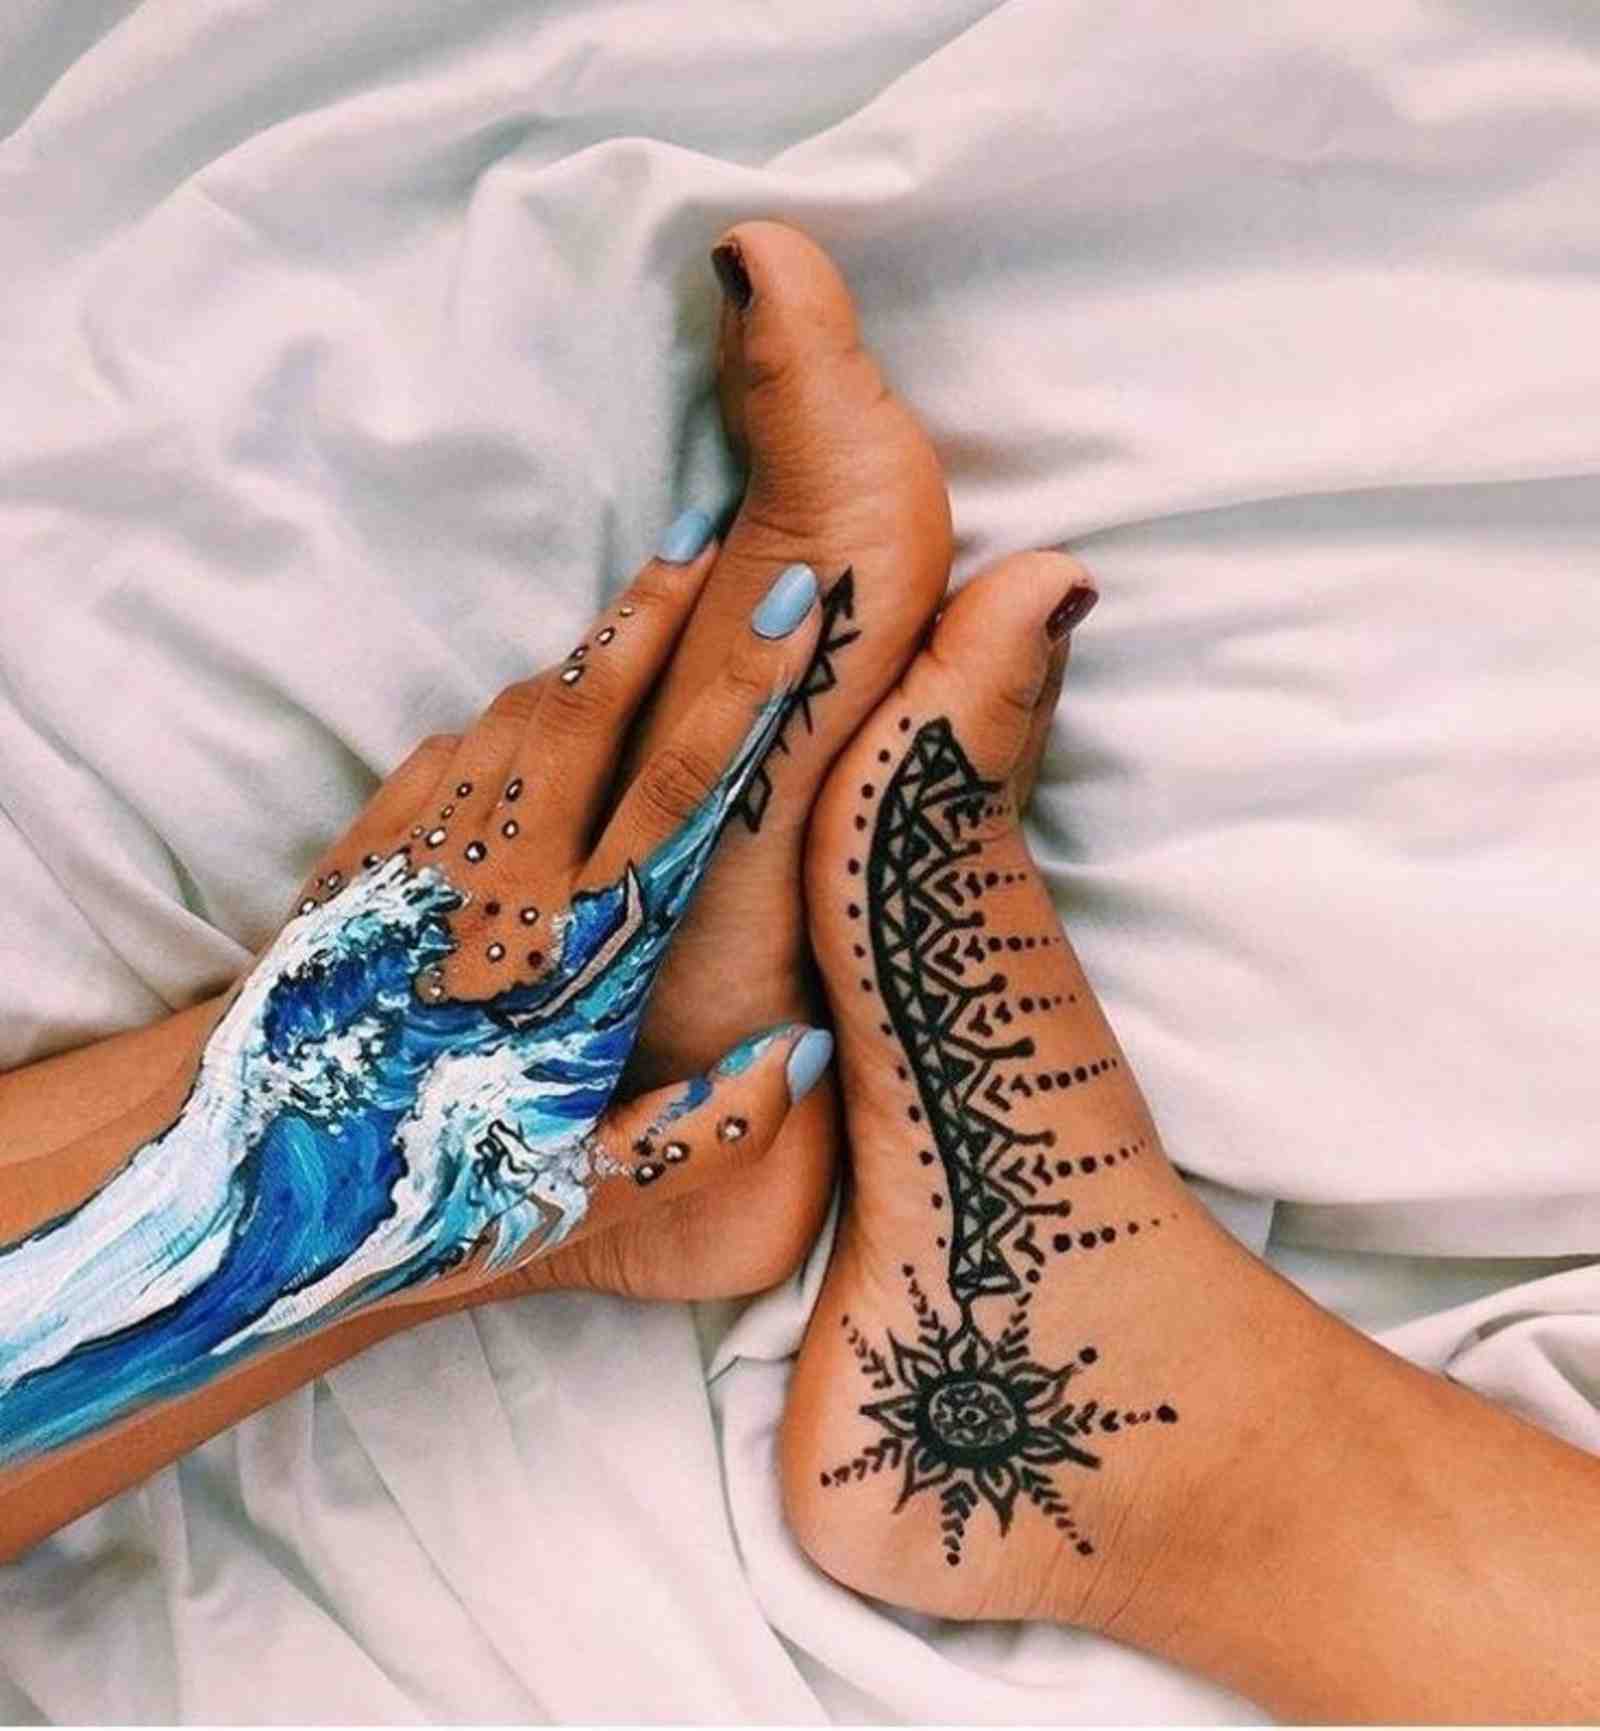 Body Painting Art Handtattoo Henna Tattoo Trends Pinterest Tattoodesign Frauen